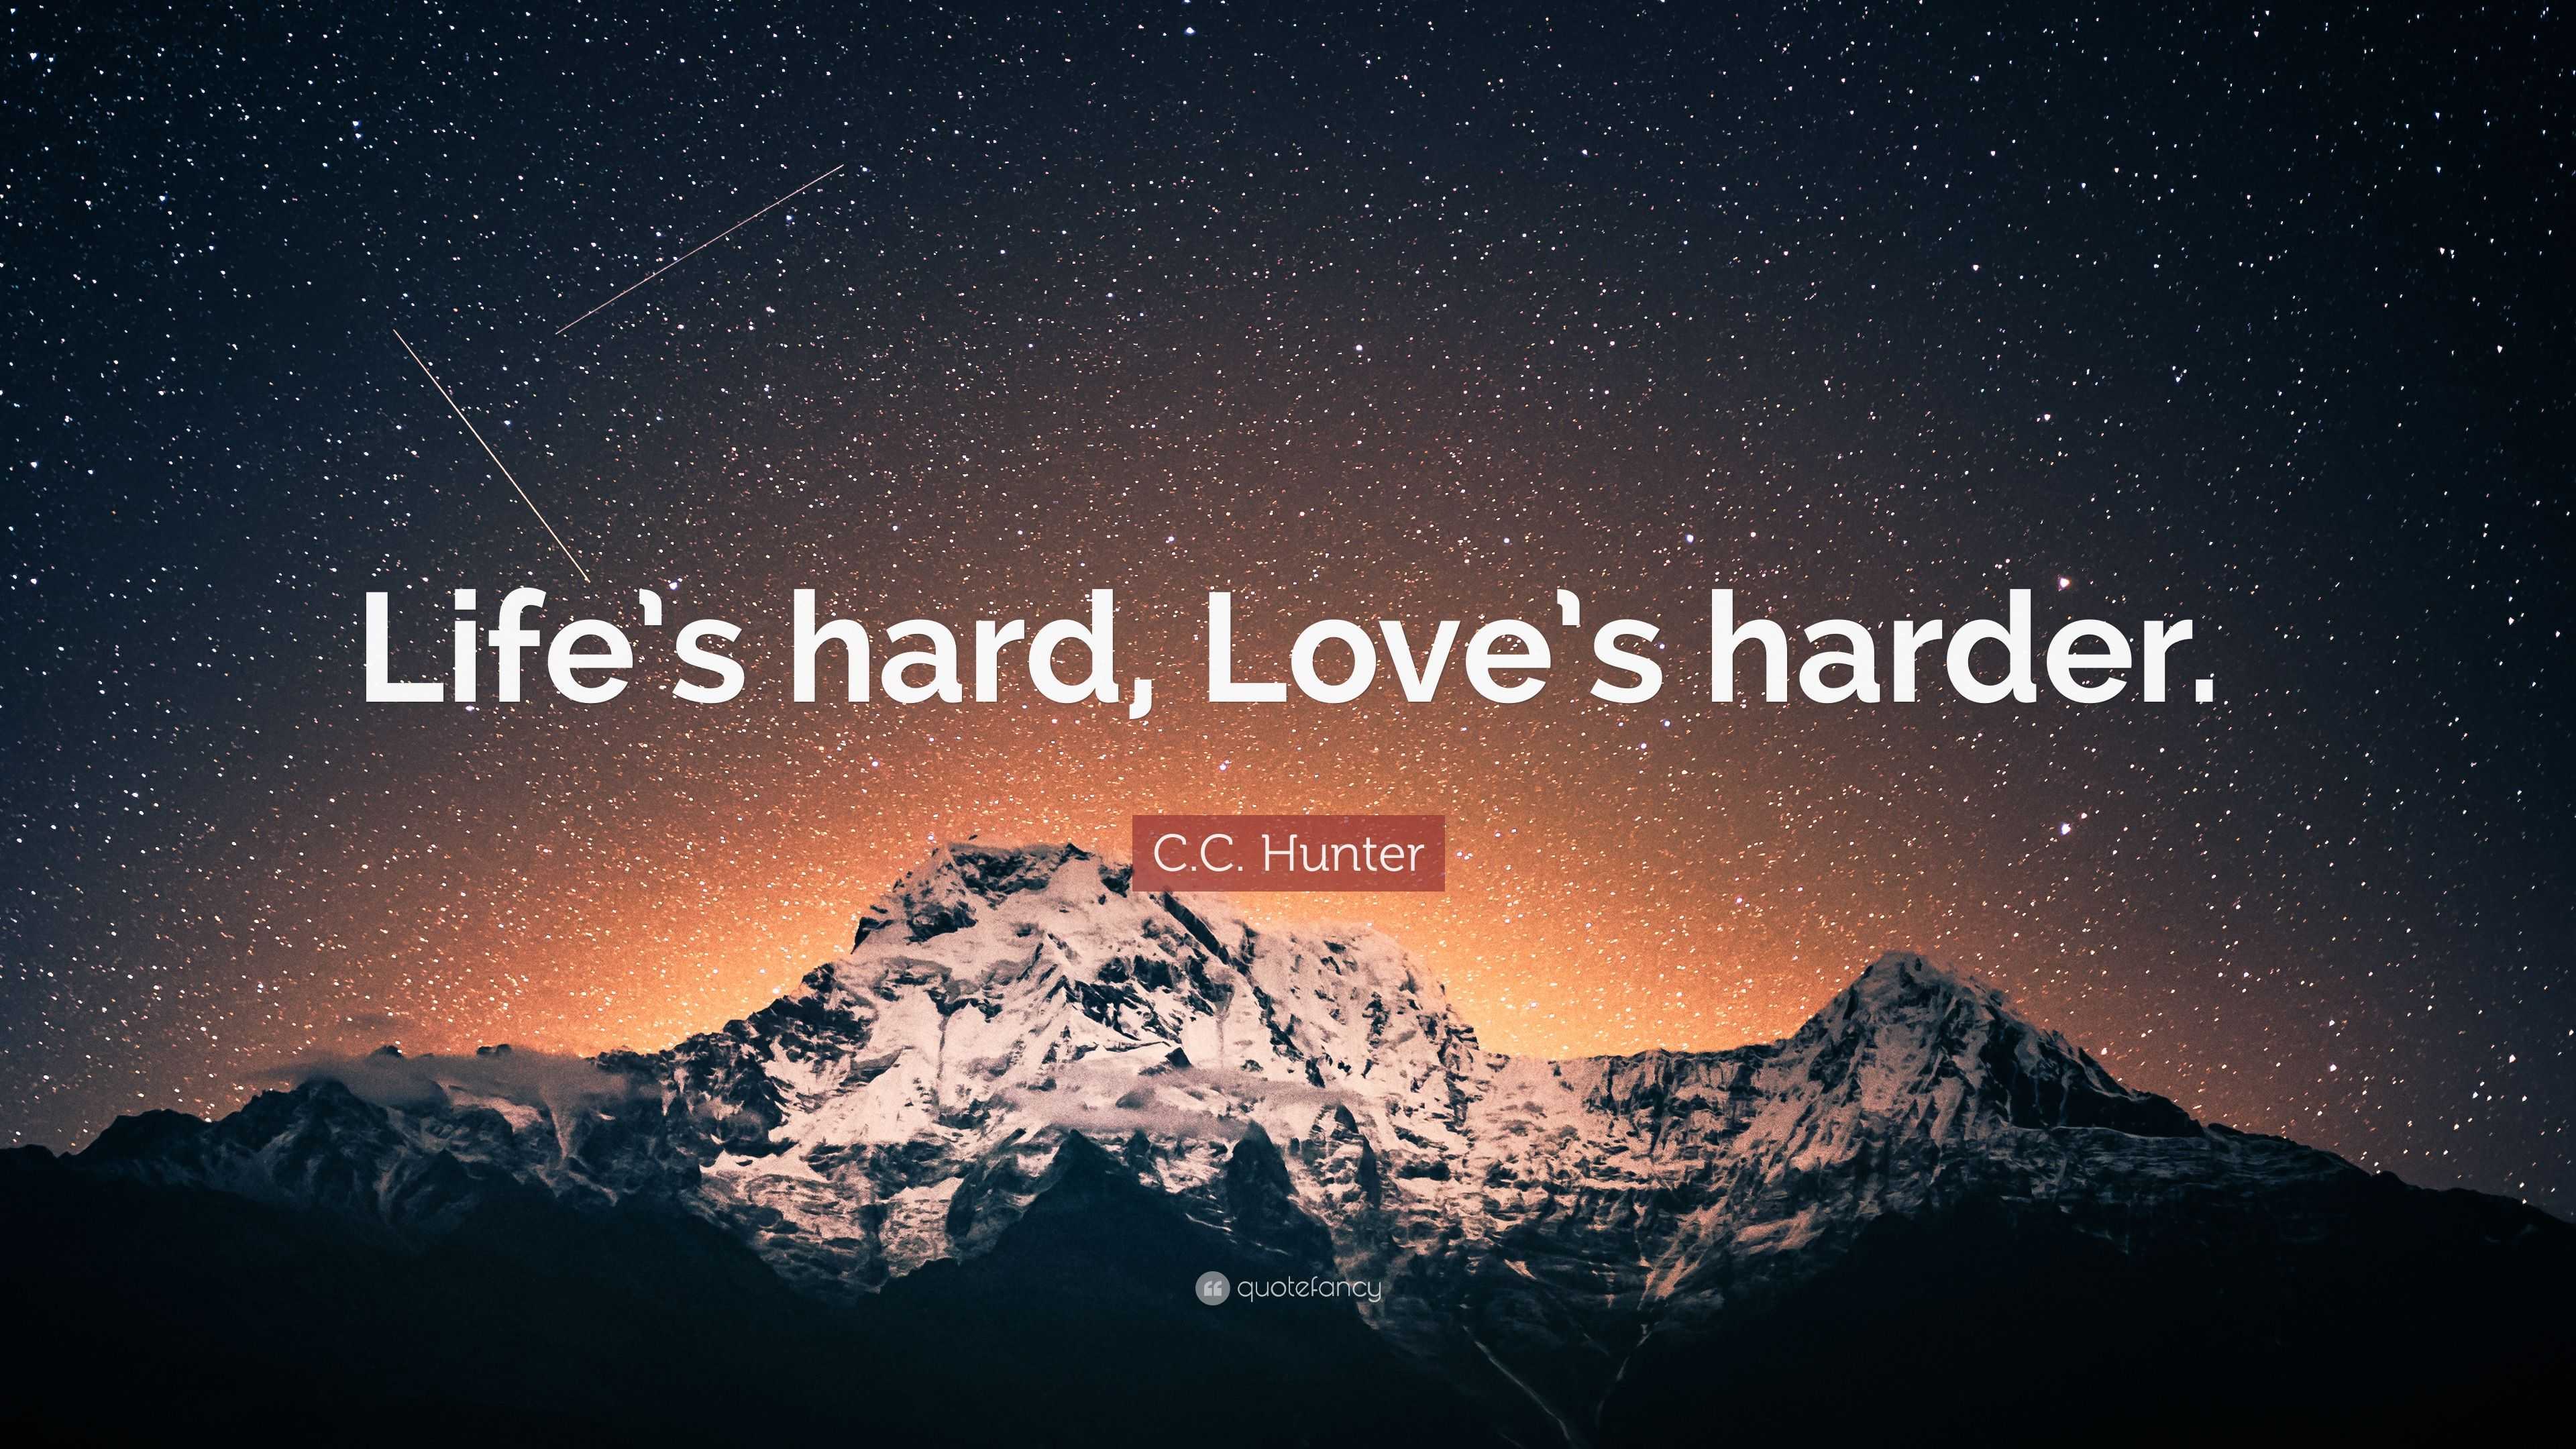 C C Hunter Quote “Life s hard Love s harder ”